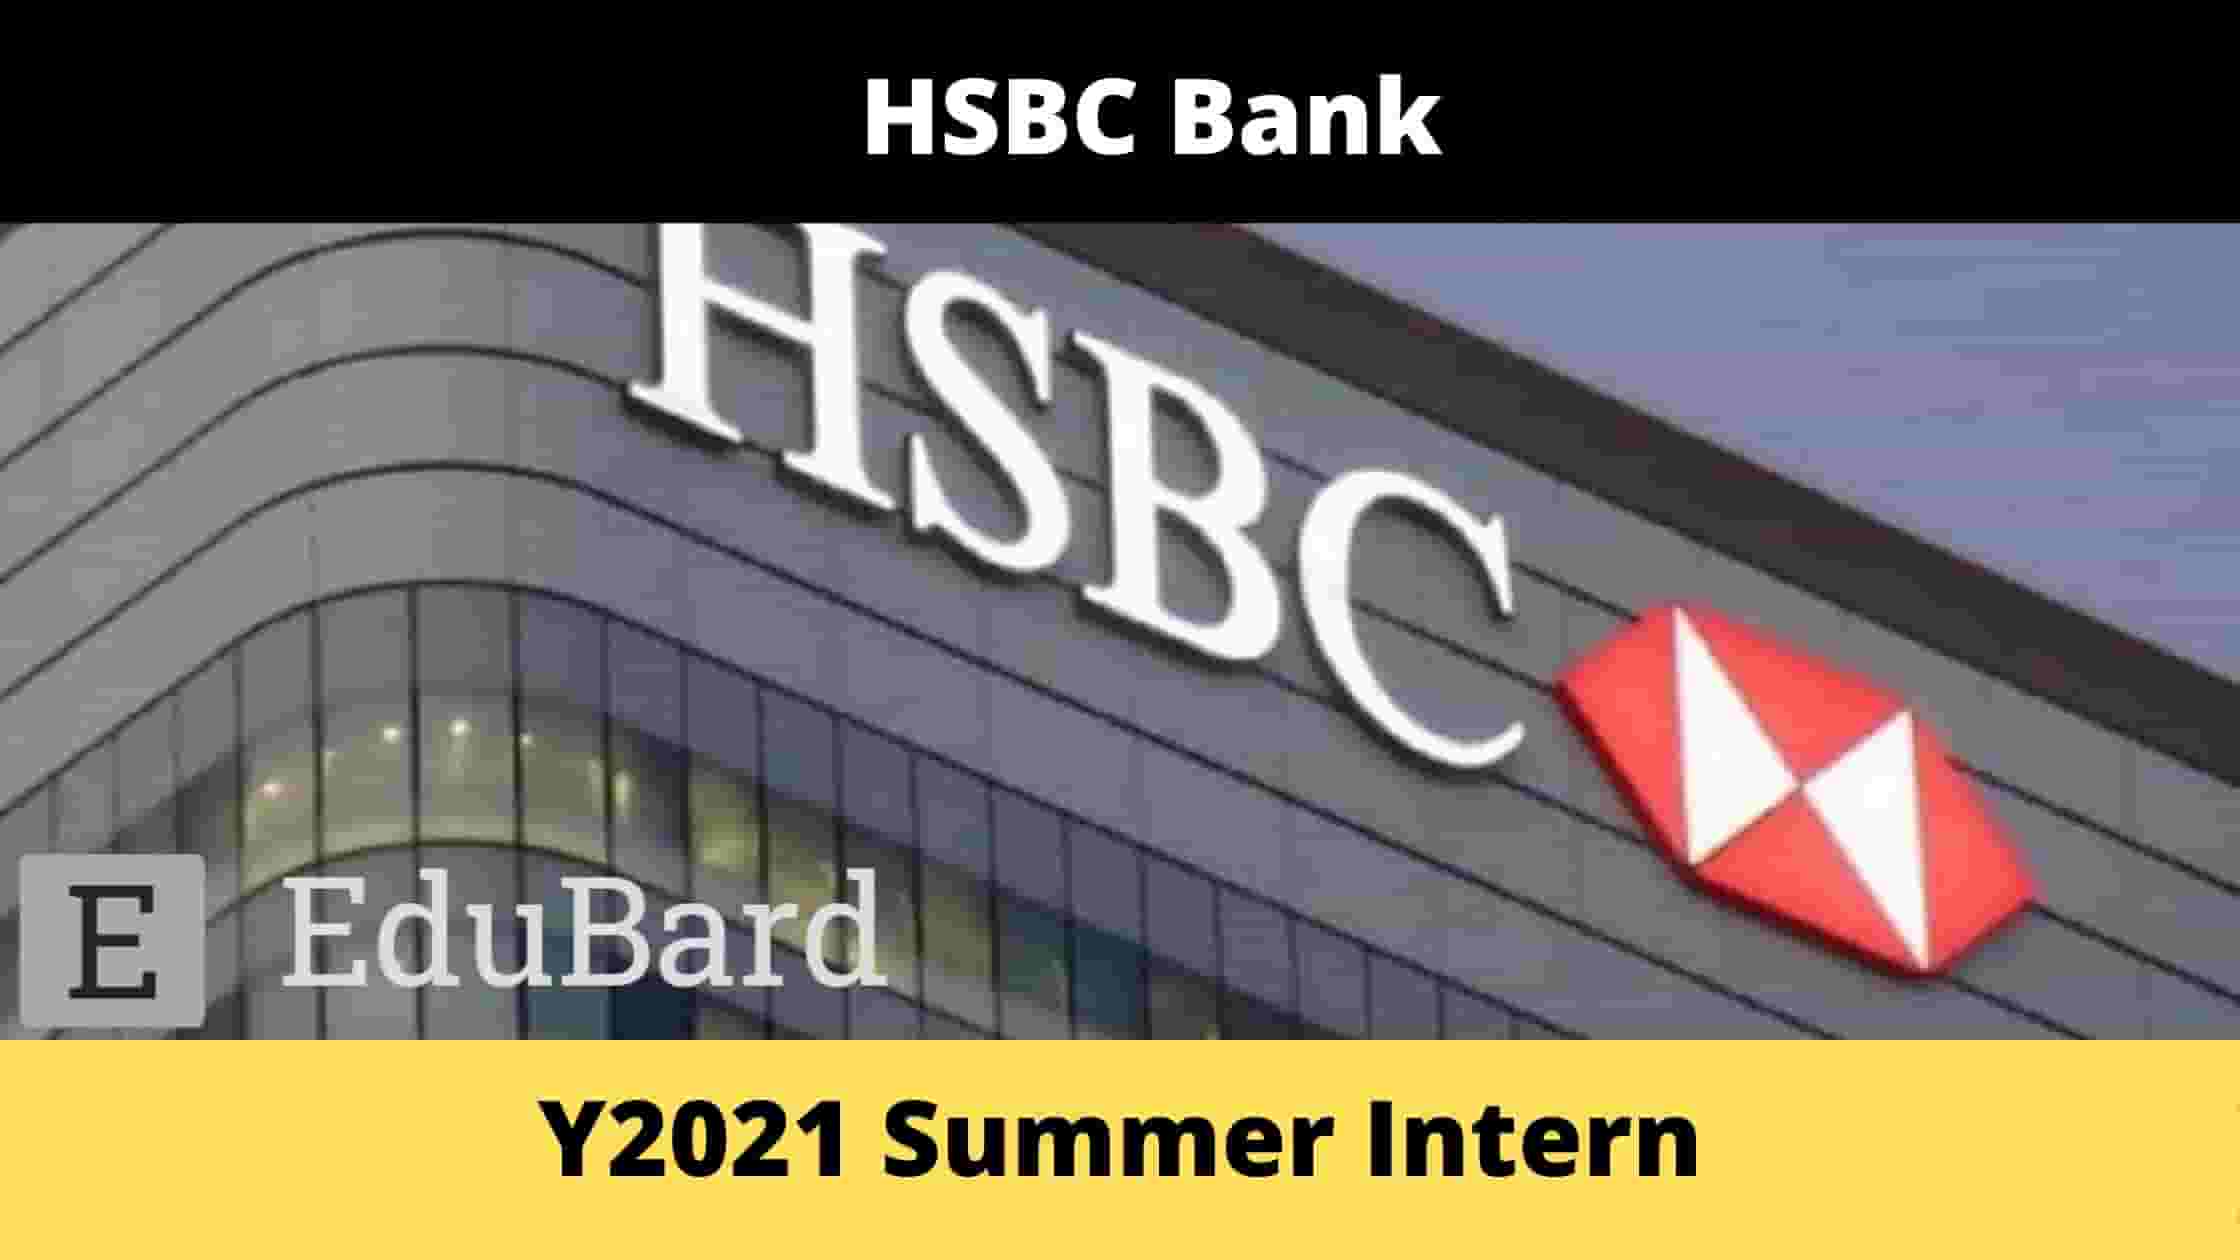 Y2021 Summer Intern, HSBC Bank, Apply Now